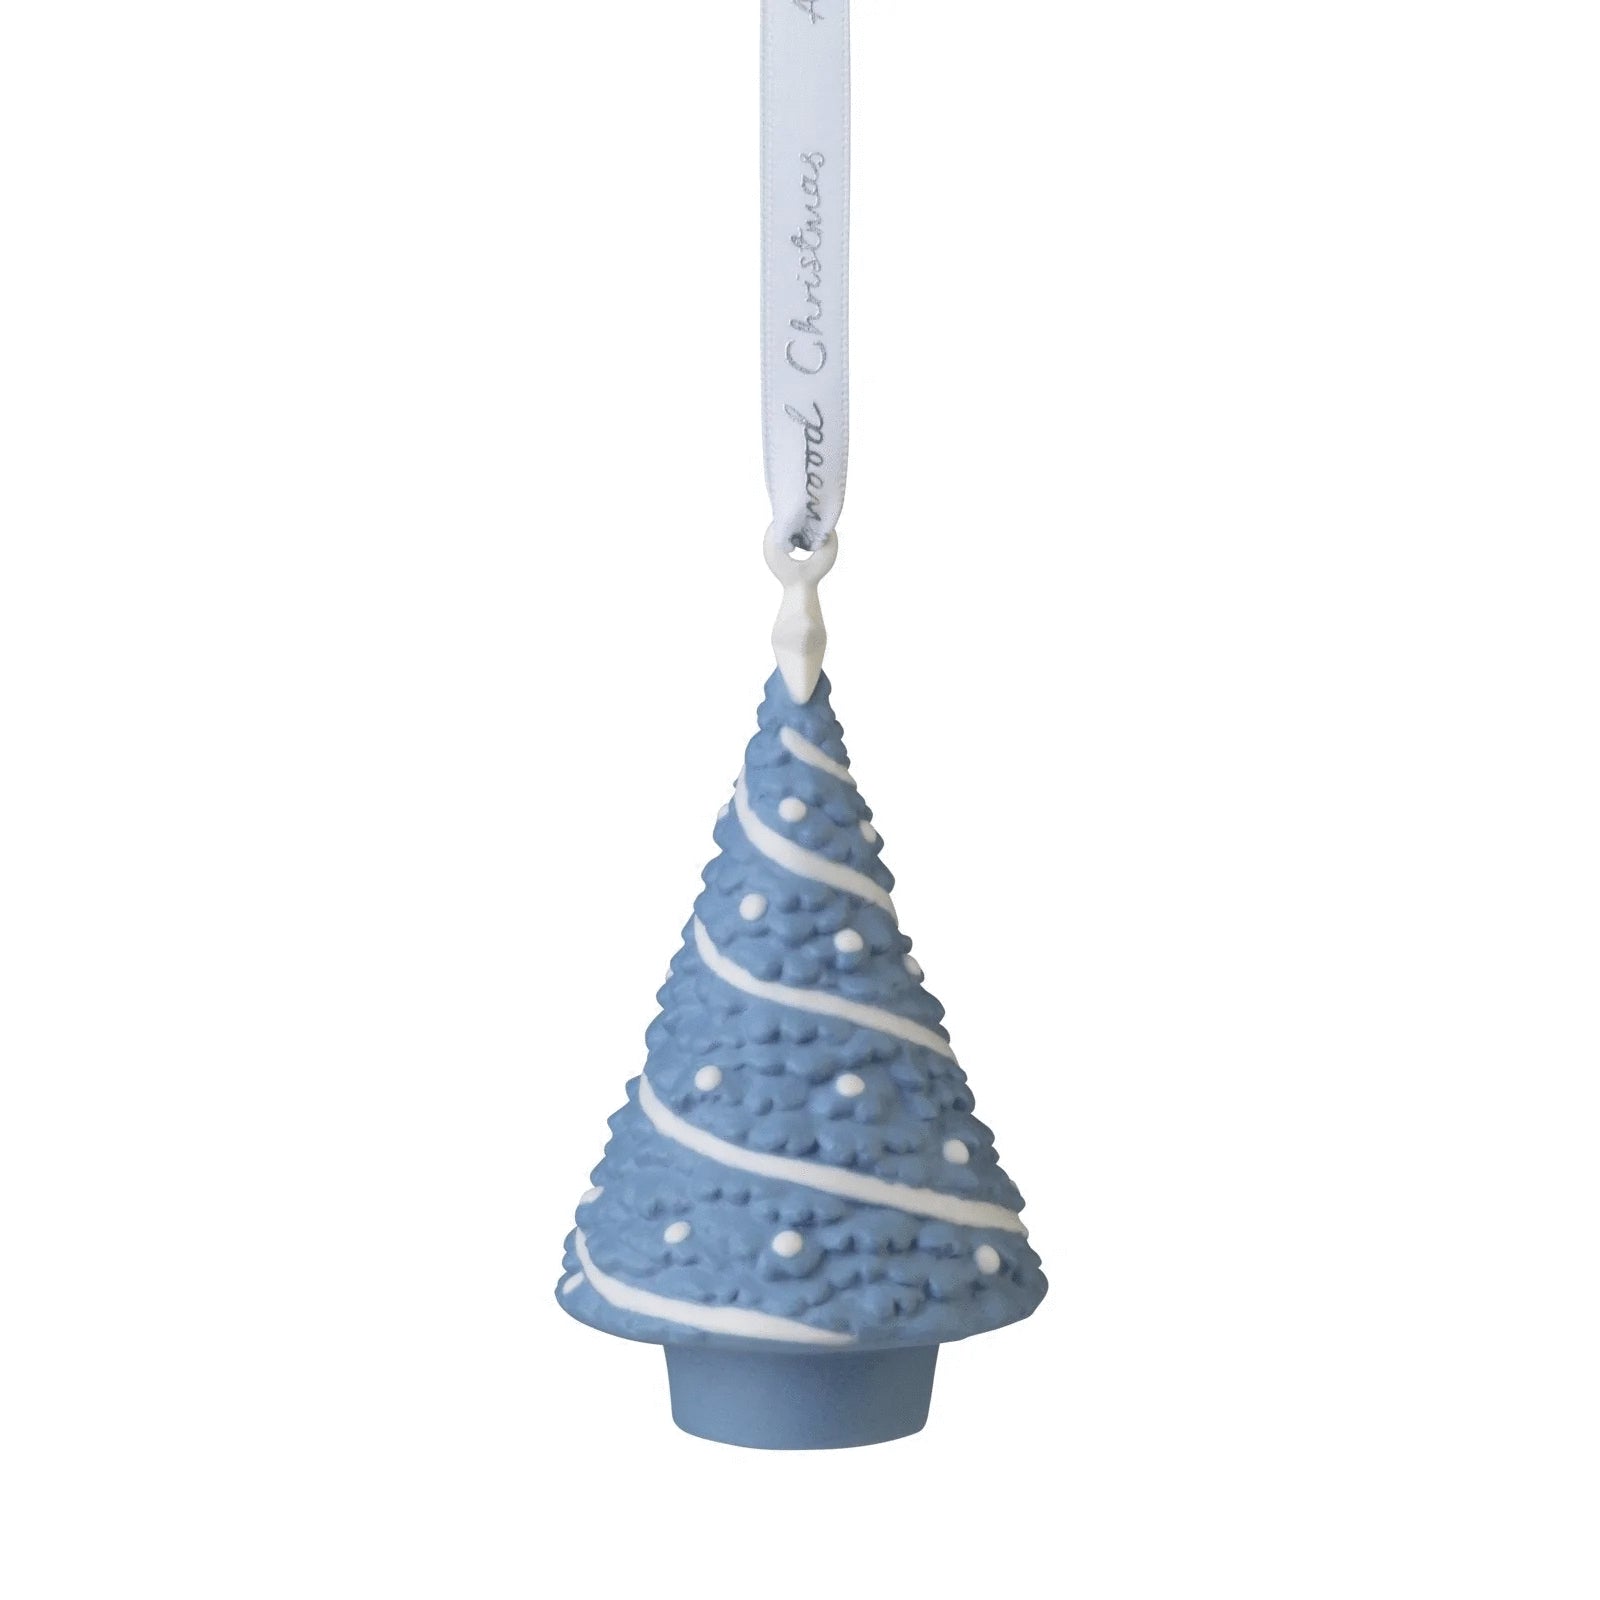 Wedgwood Christmas Tree Ornament 2.5"diameter X 4.5"tall - Royal Gift